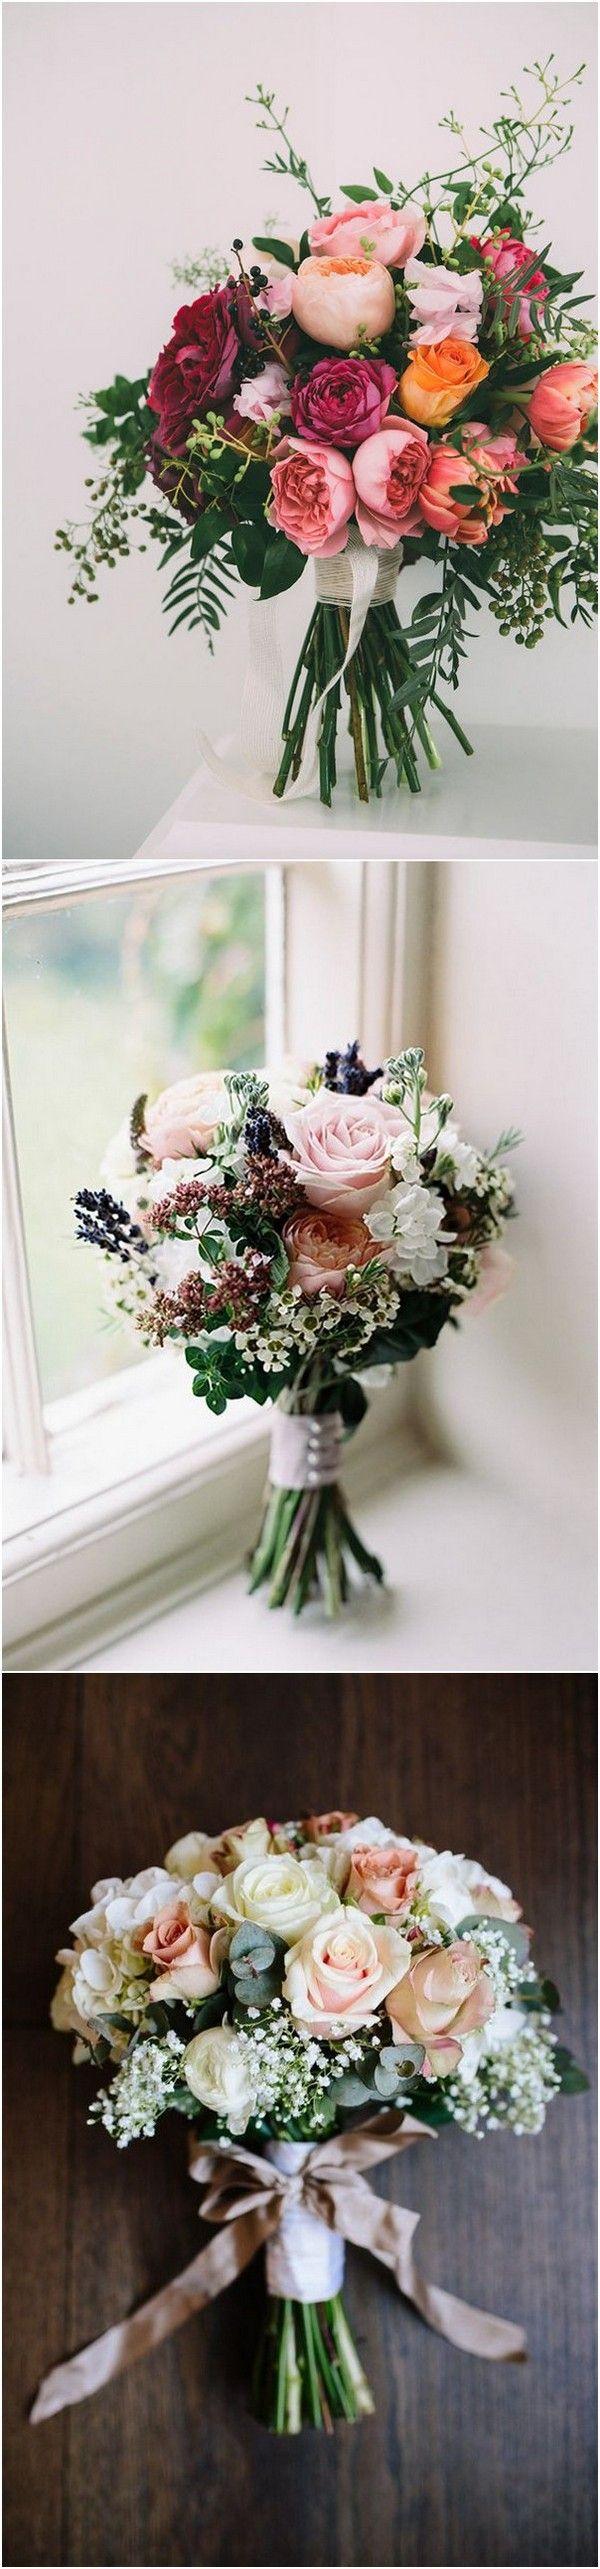 زفاف - 15 Stunning Wedding Bouquets For 2018 - Page 2 Of 2